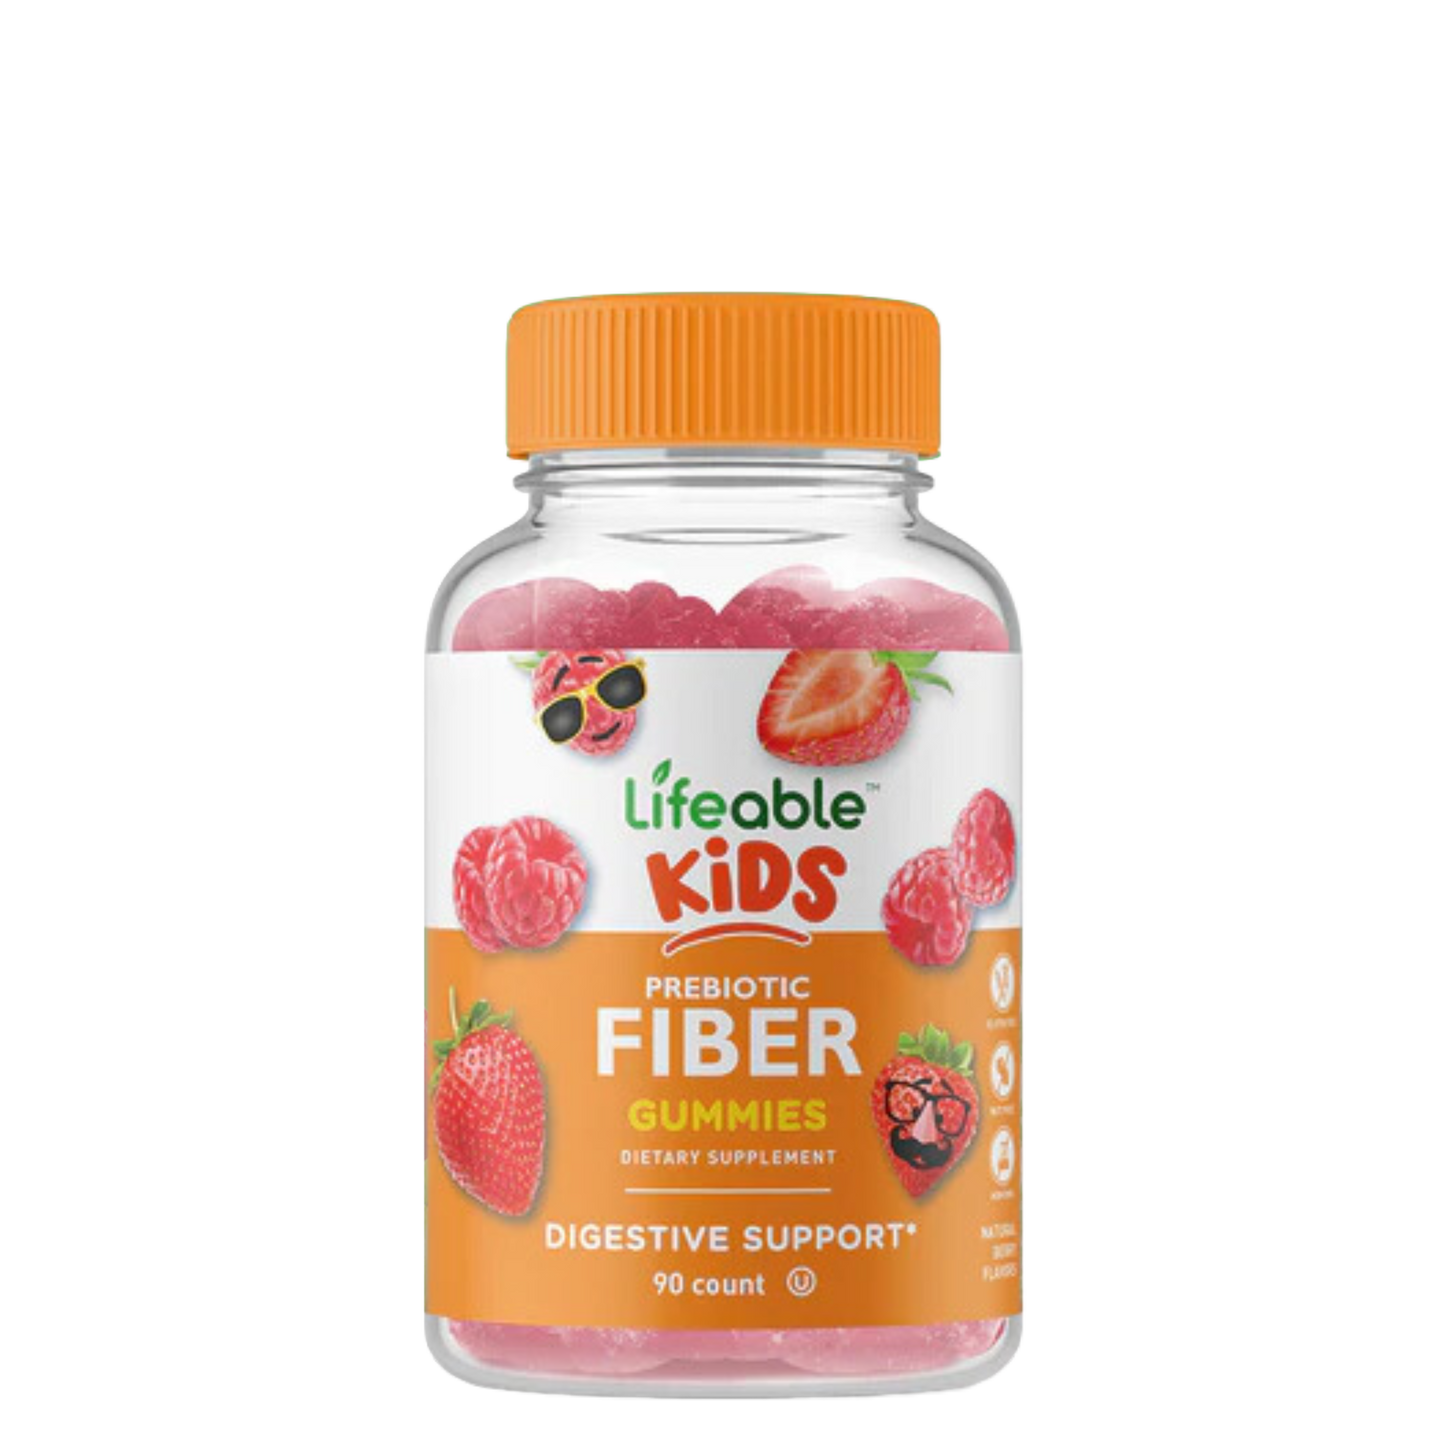 Prebiotic Fiber Gummies for Kids